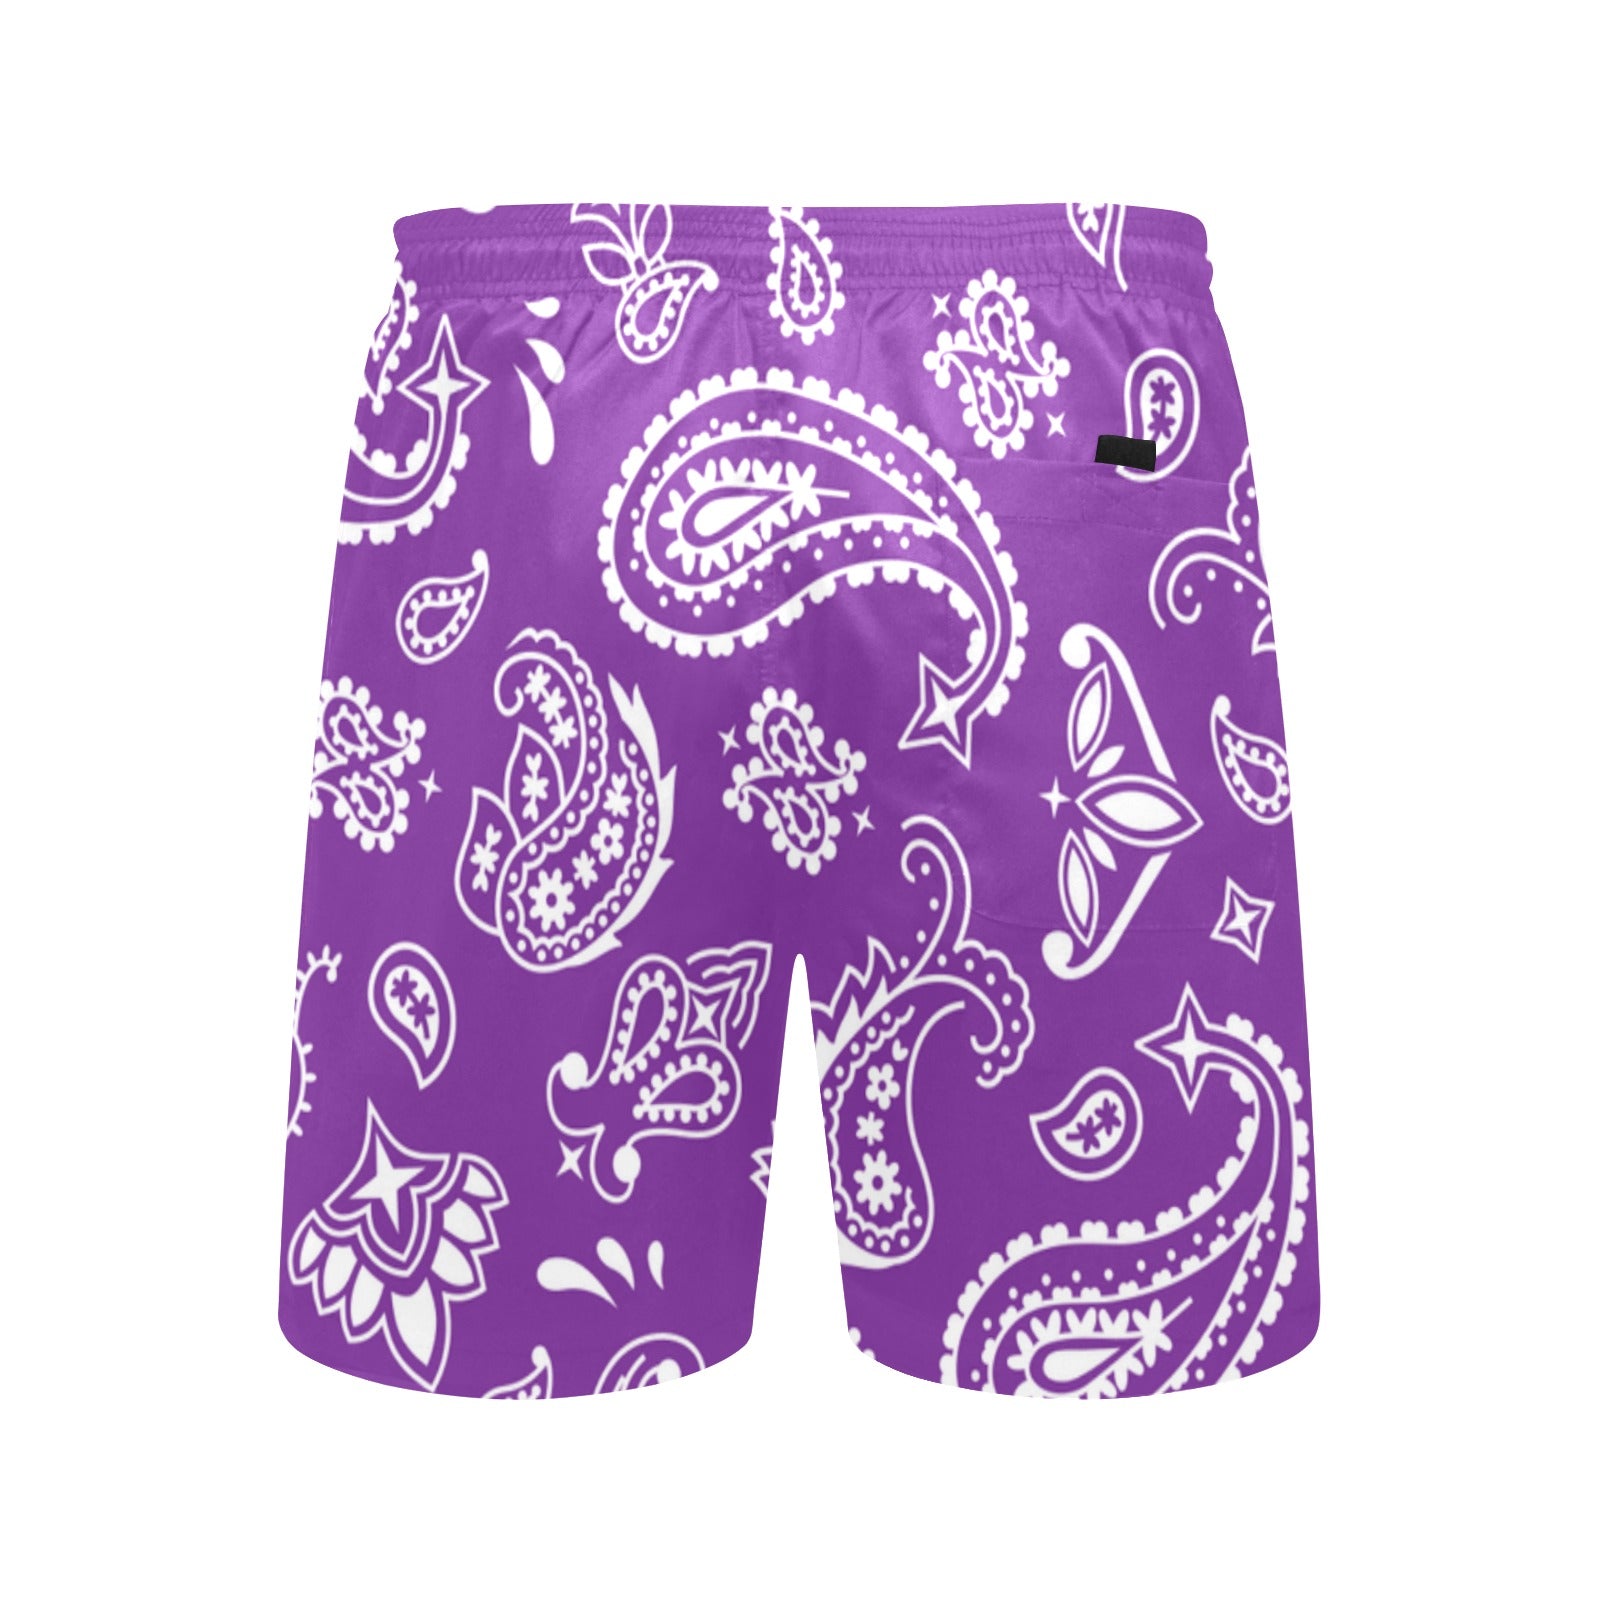 Iconic Royalty Purple  Mid-Length Bandana Beach Shorts